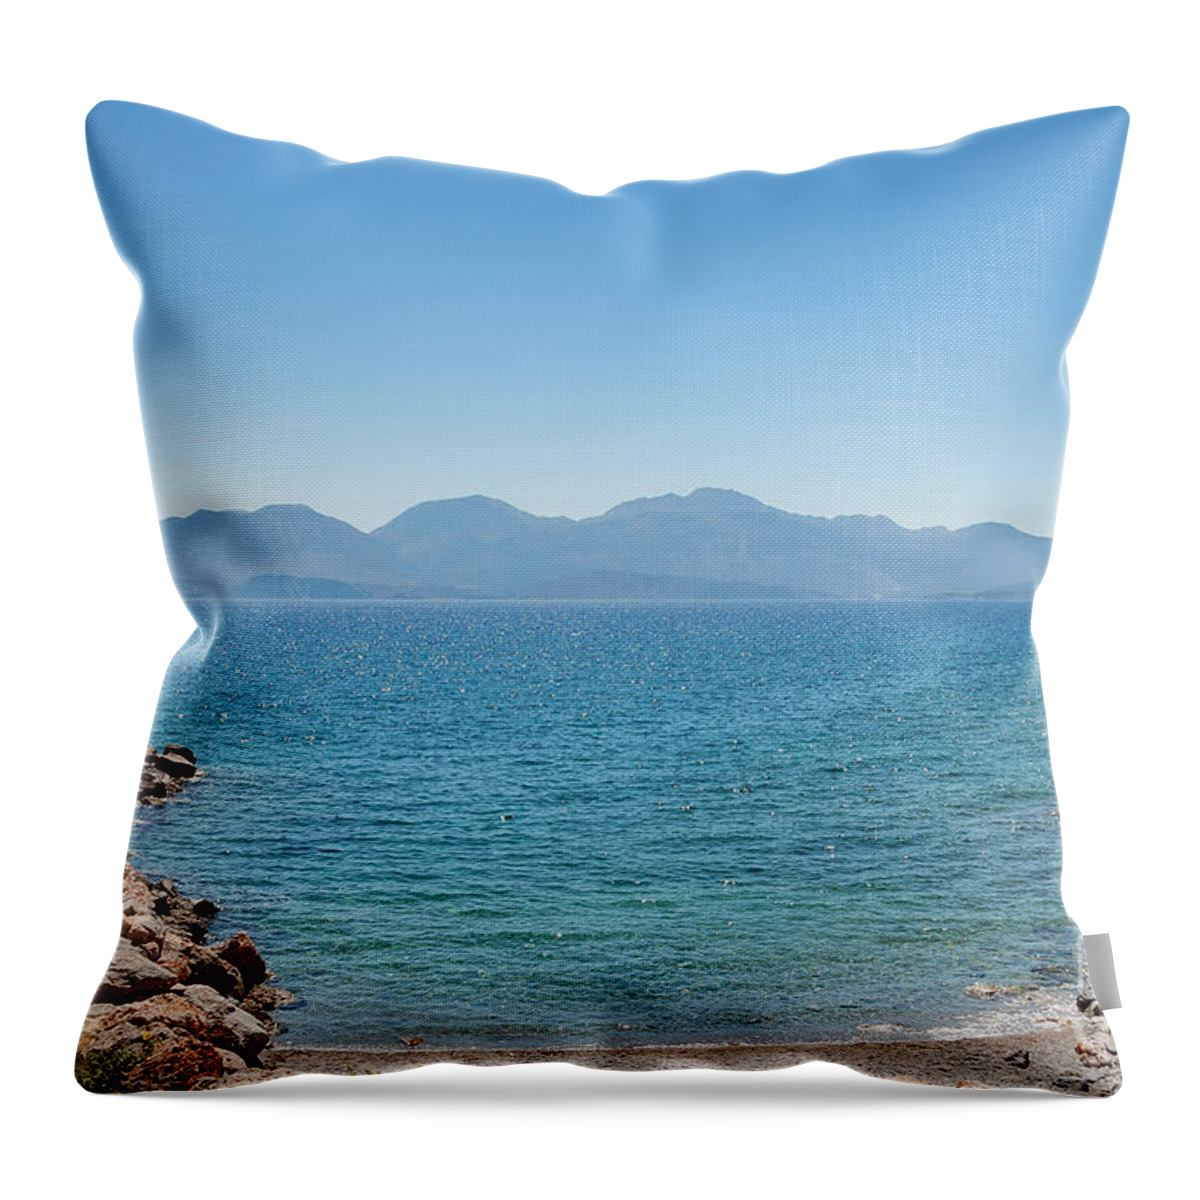 Crete Throw Pillow featuring the photograph Crete Mountain Range From Agios Nicholas by Antony McAulay